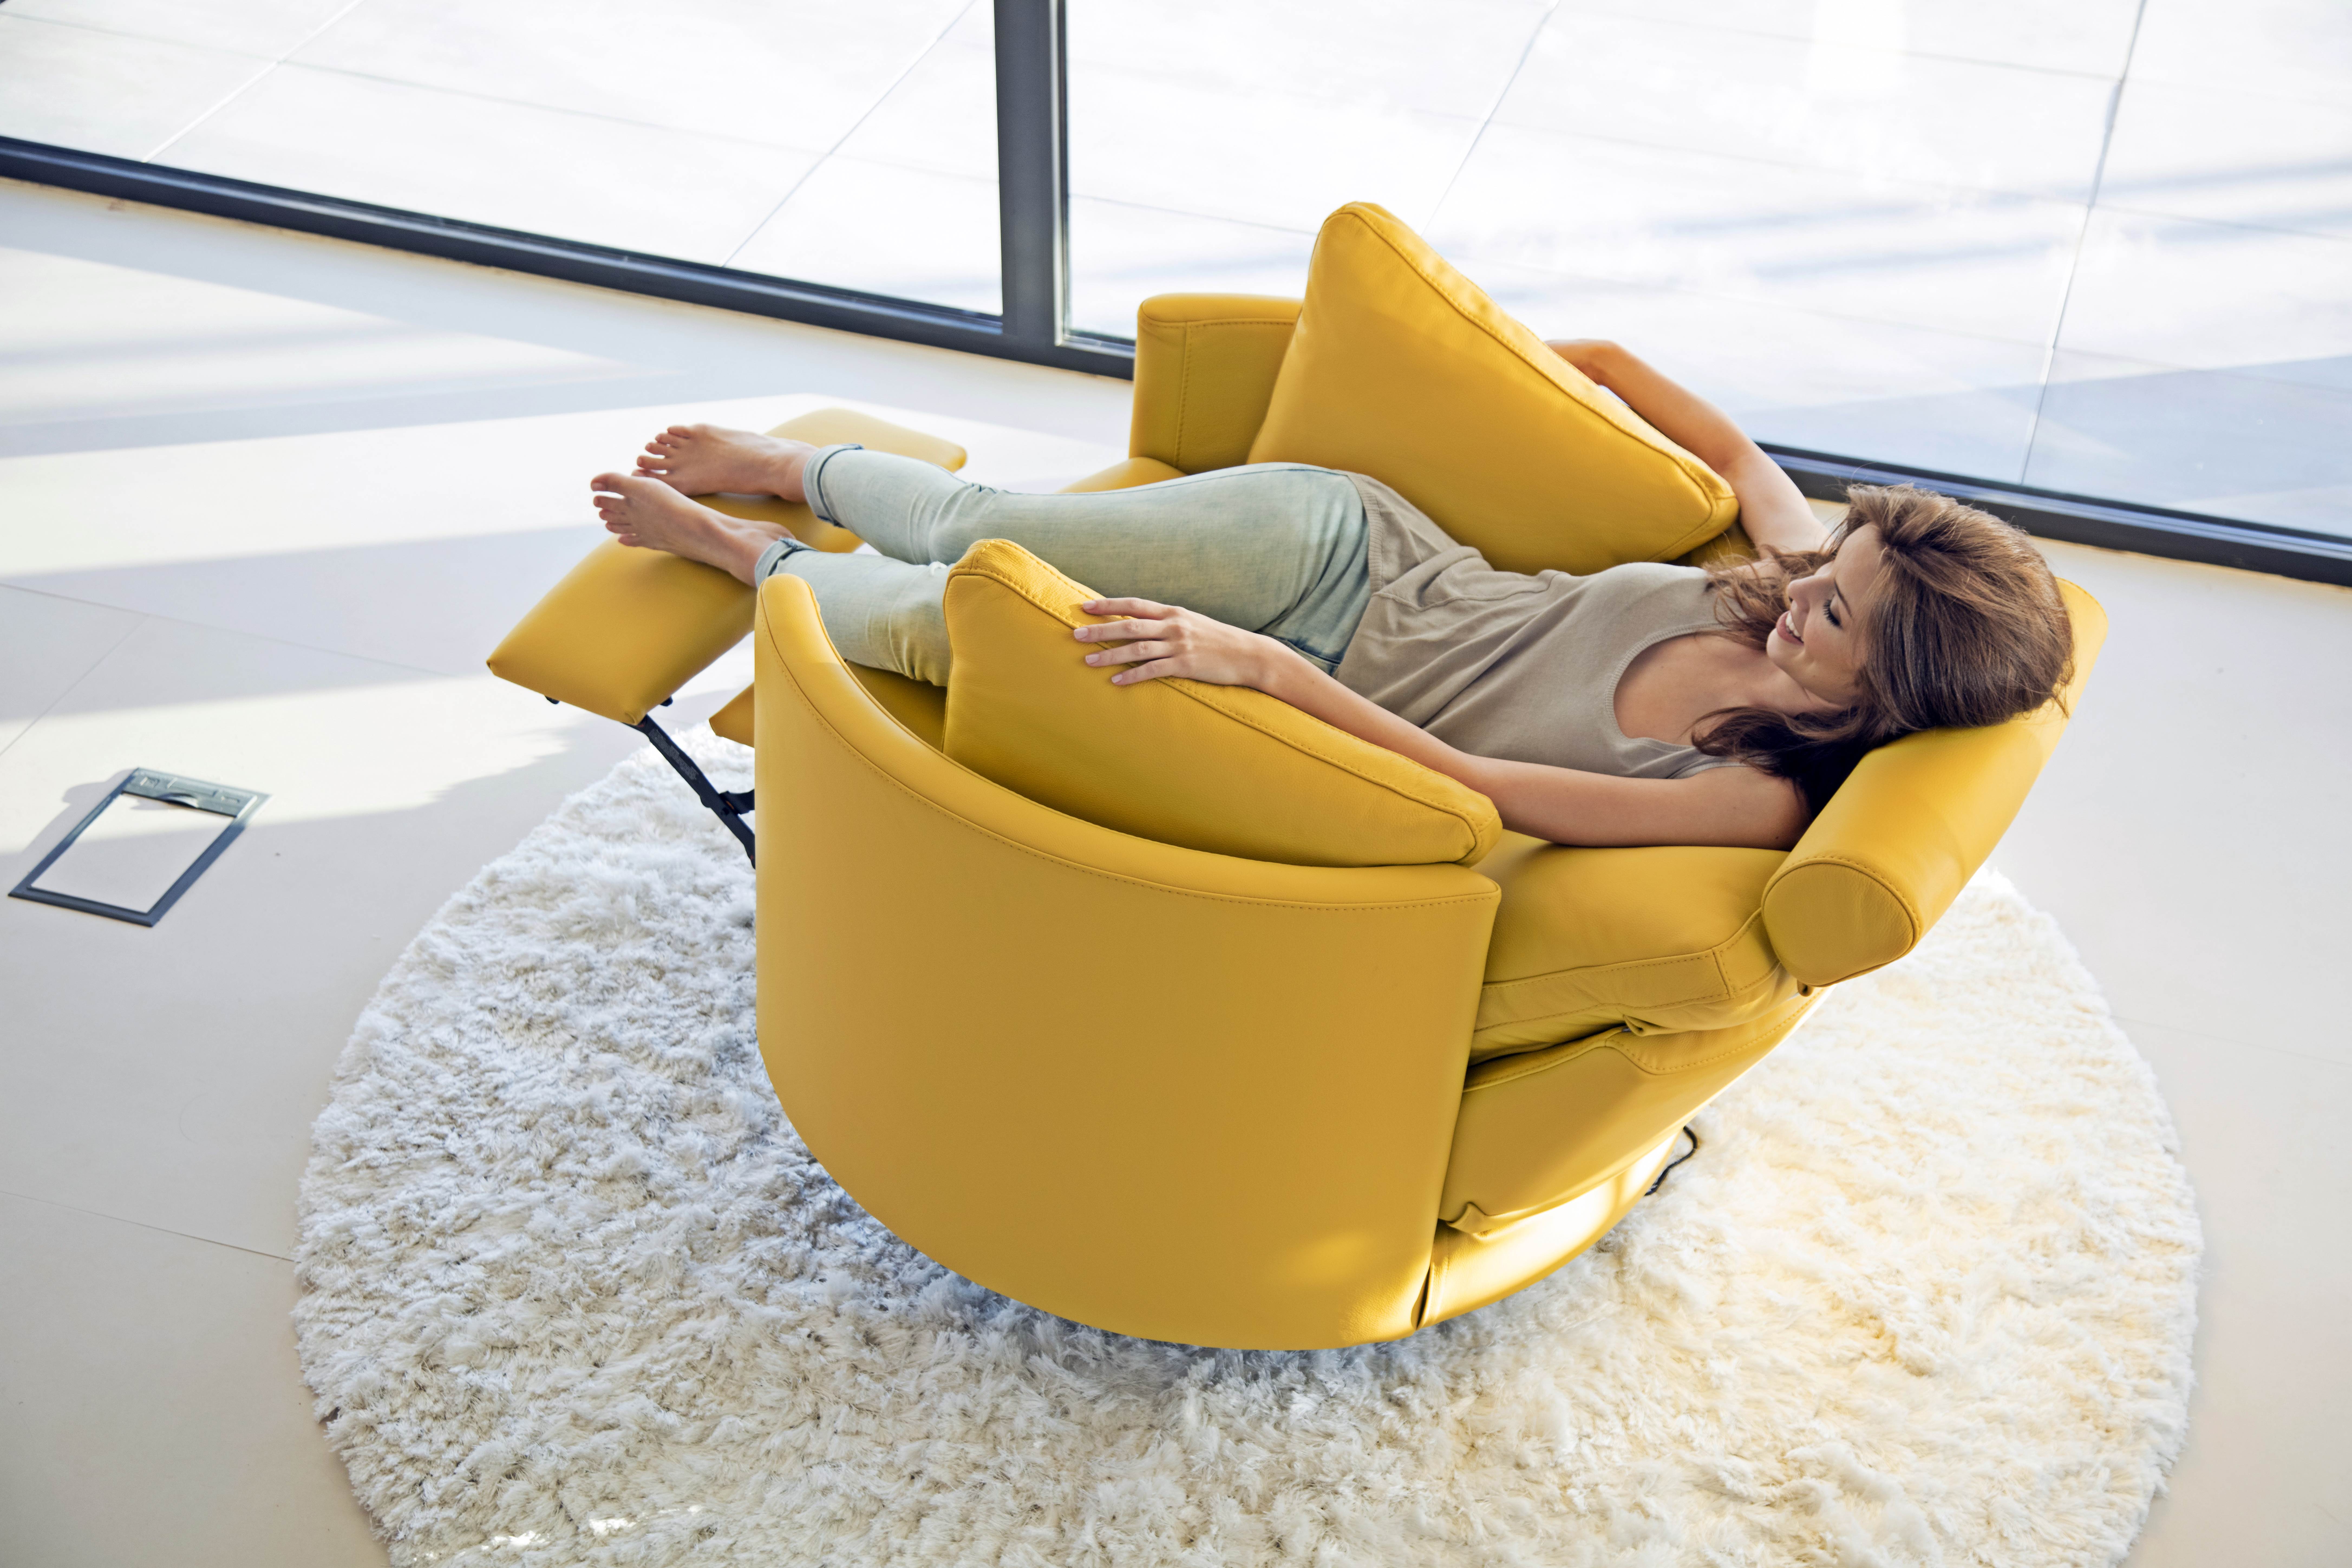 https://www.story.fr/wp-content/uploads/2017/09/fauteuil-rond-pivotant-relaxation-electrique-cuir-jaune.jpg